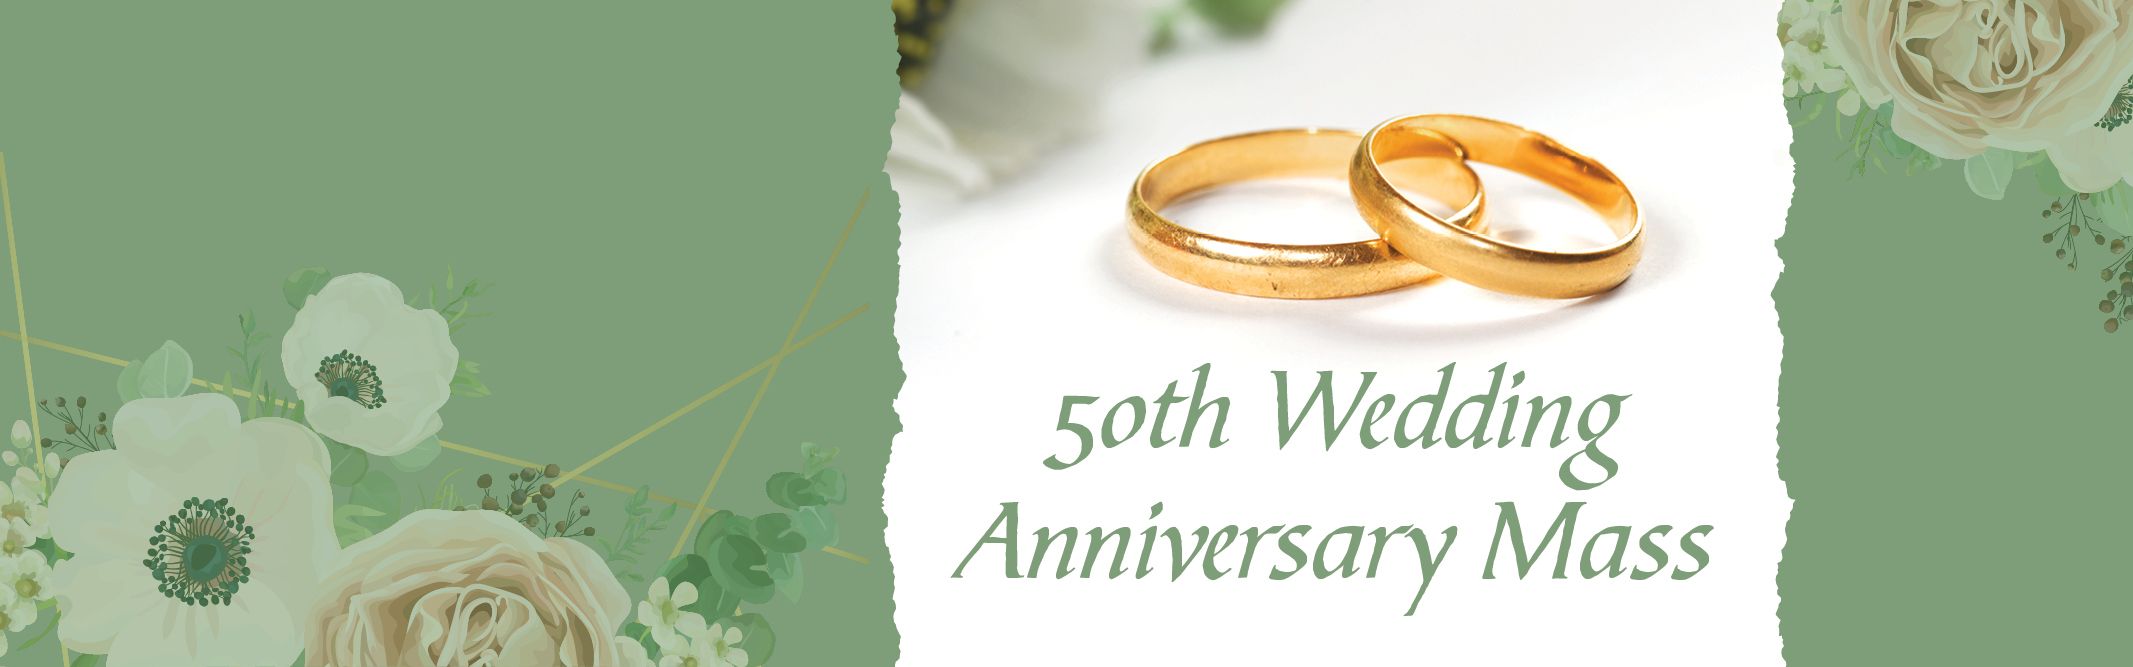 50th Wedding Anniversary Mass